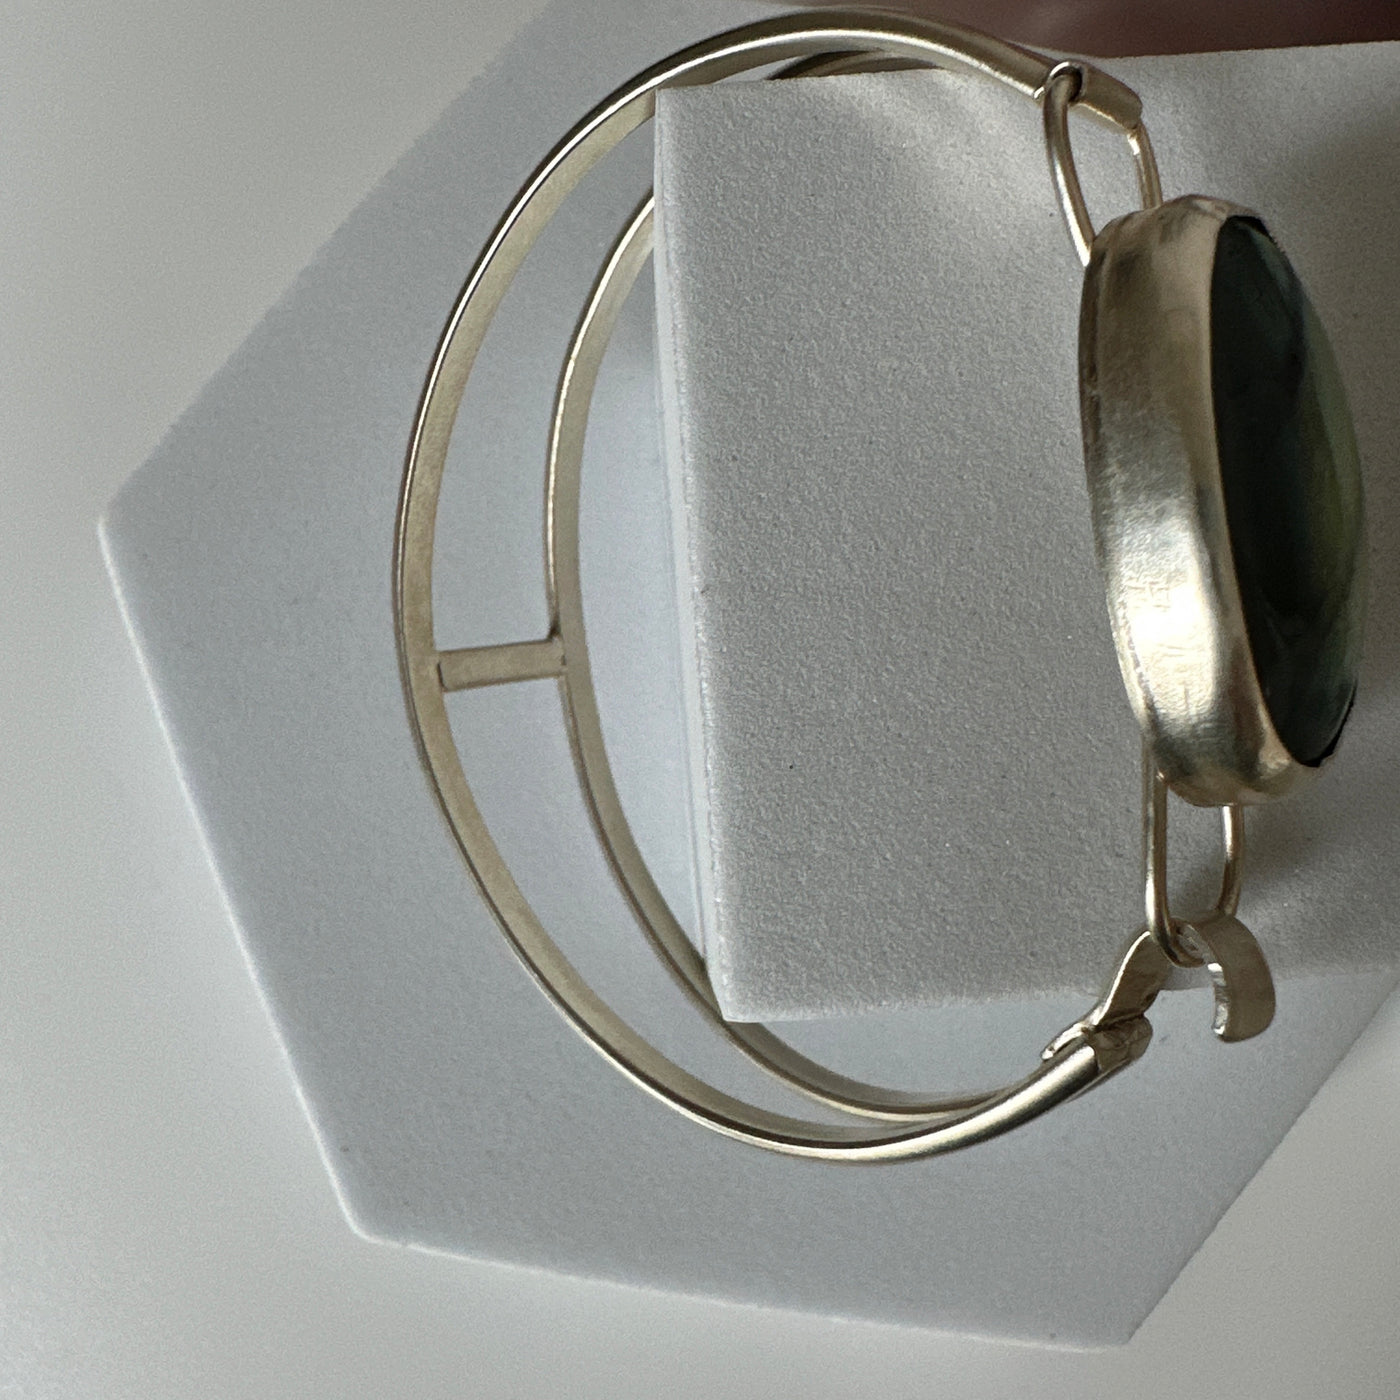 Silver rigid bracelet